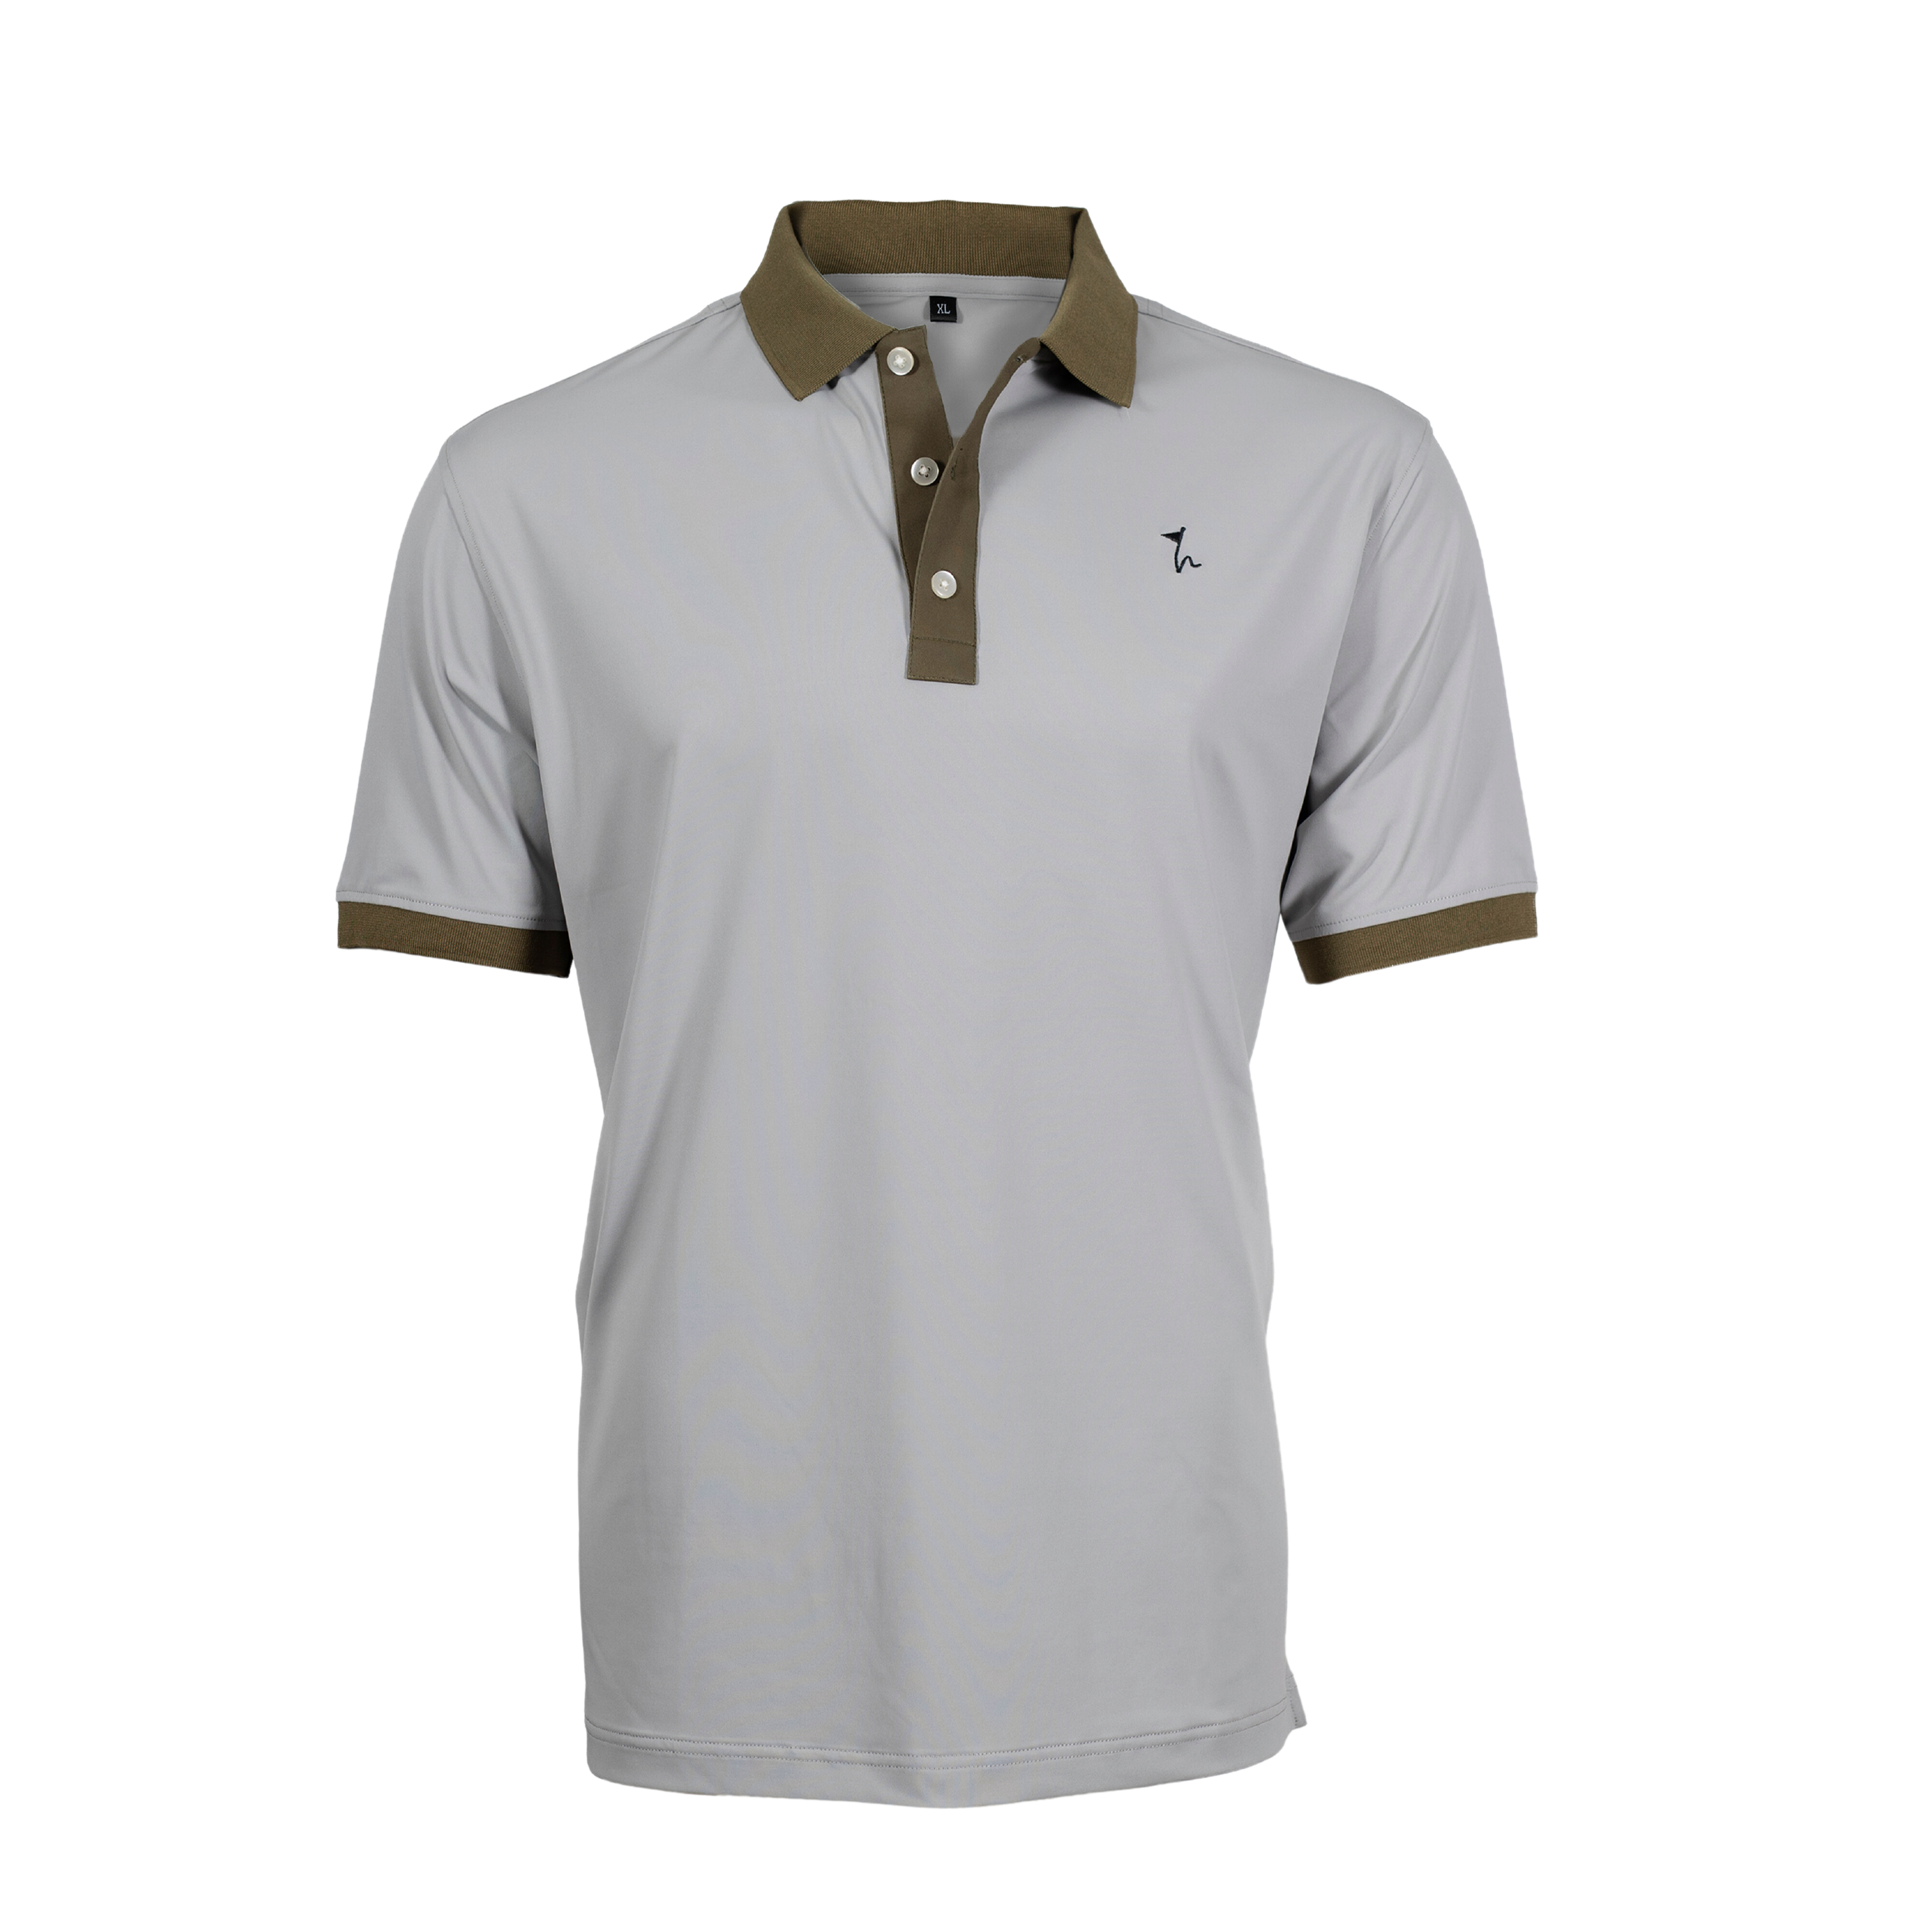 Hickory "Tenpin" Short Sleeve Polo - Limited Edition